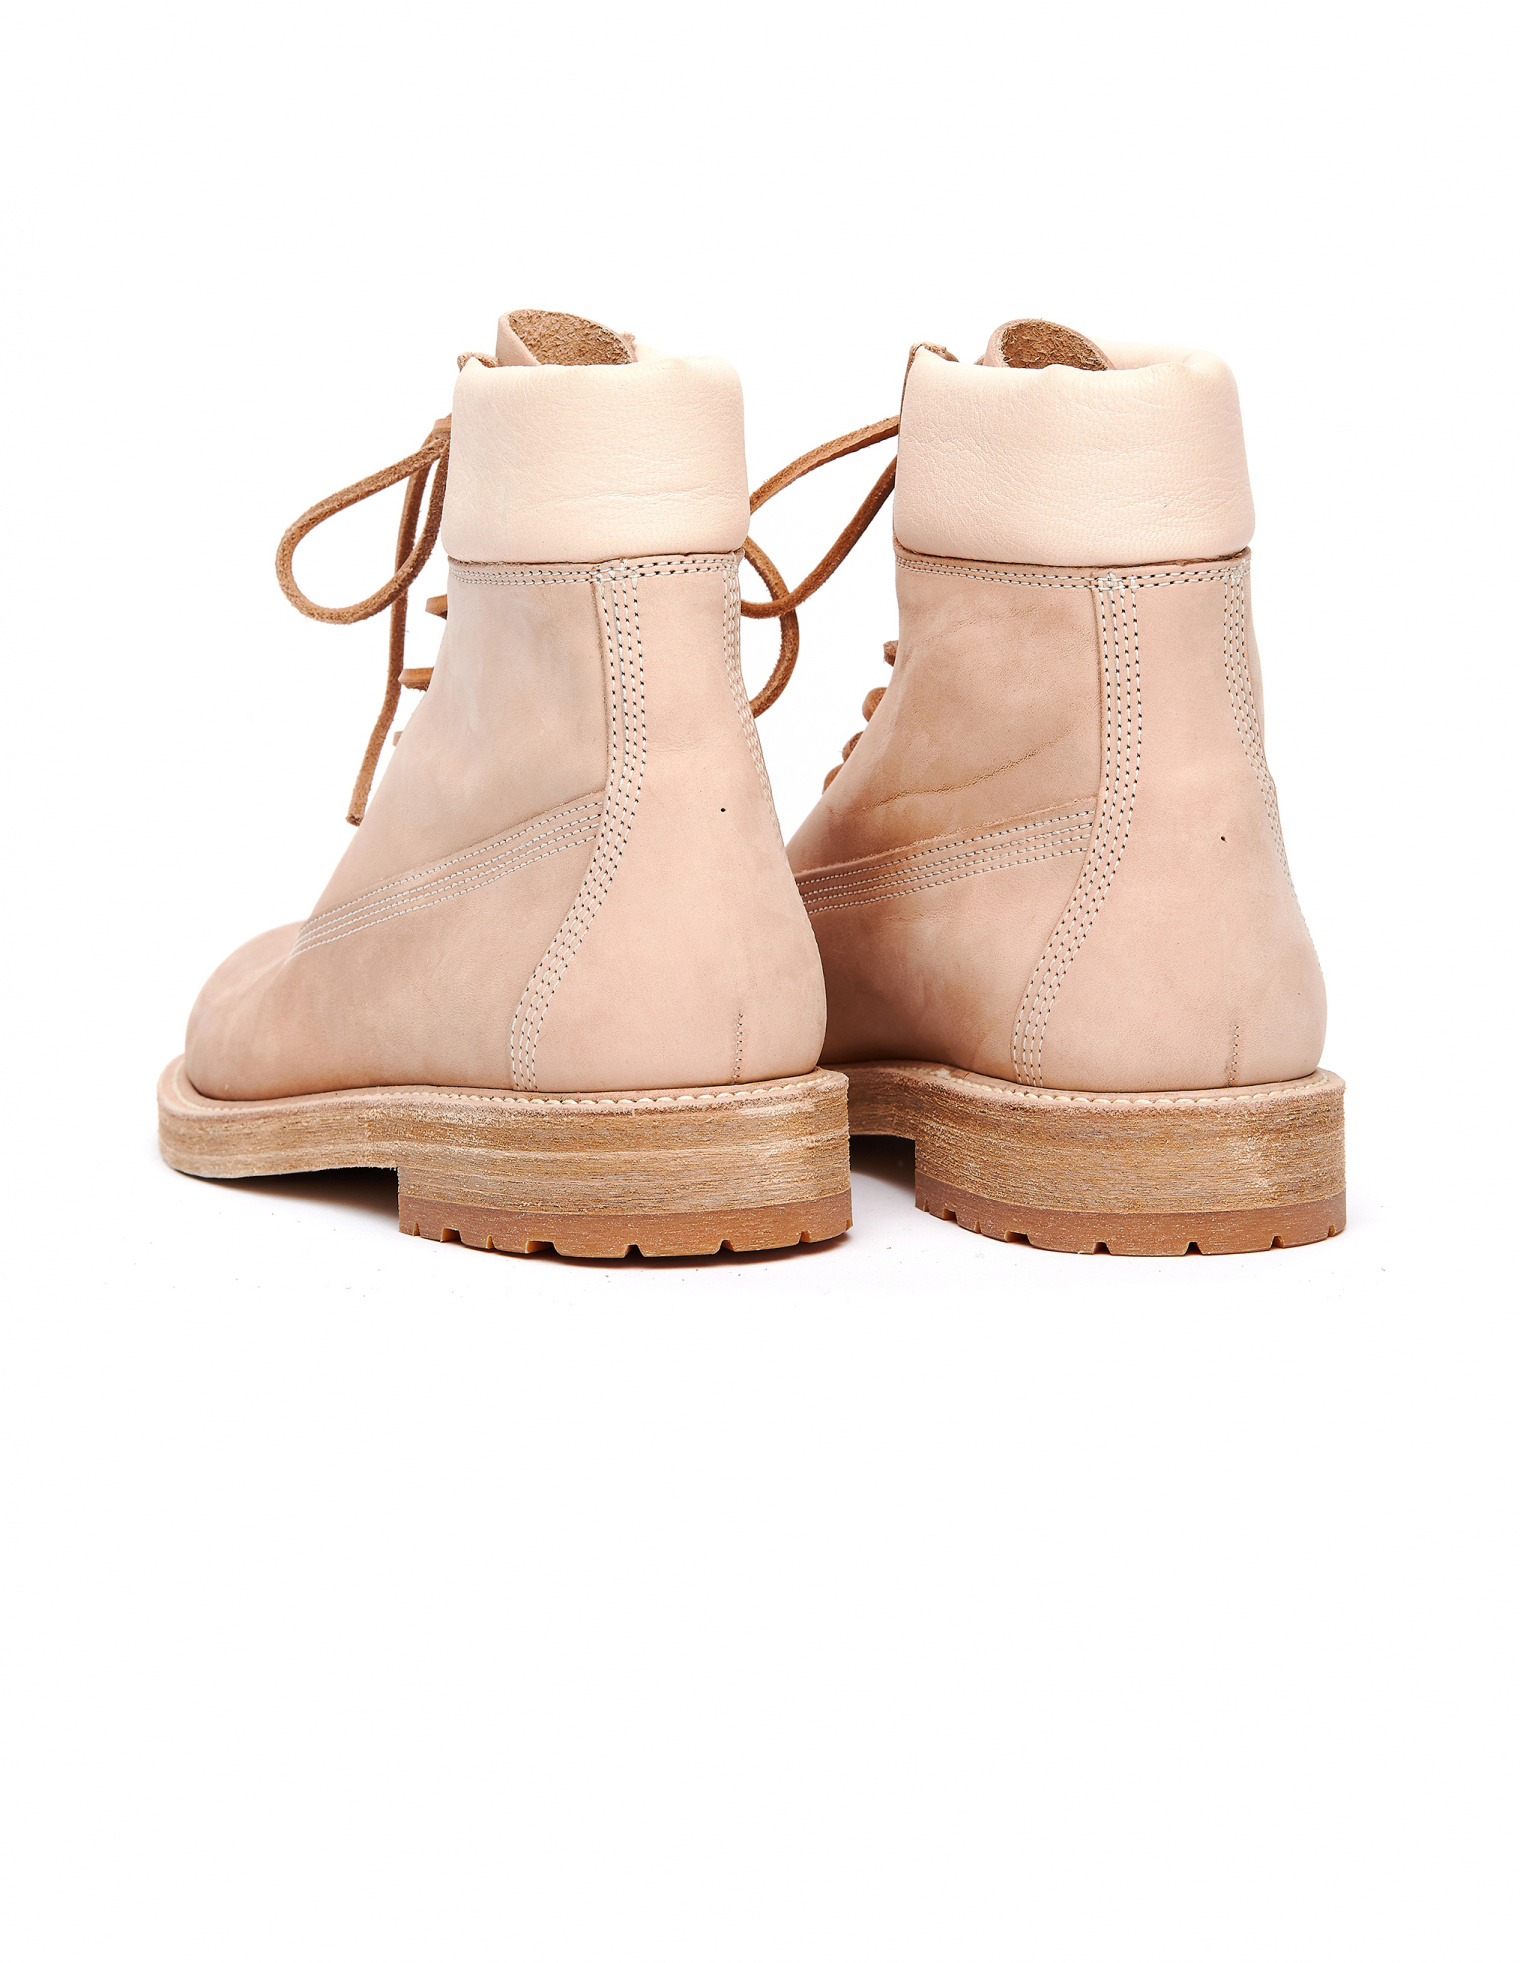 Buy Hender Scheme men beige leather mip-14 boots for $563 online 